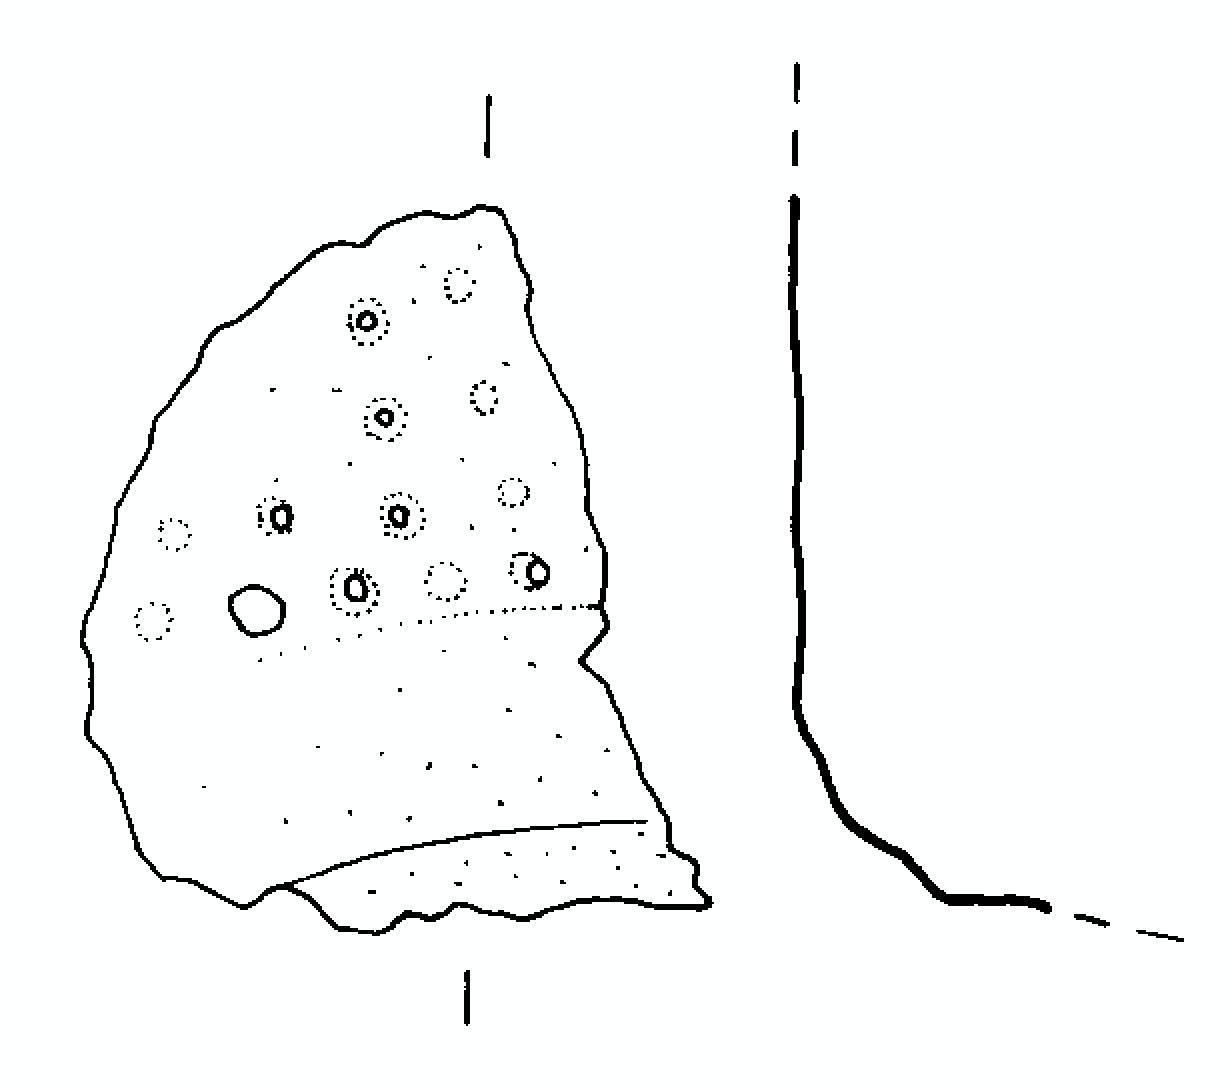 lamina (fine/primo quarto IV-III a.C)